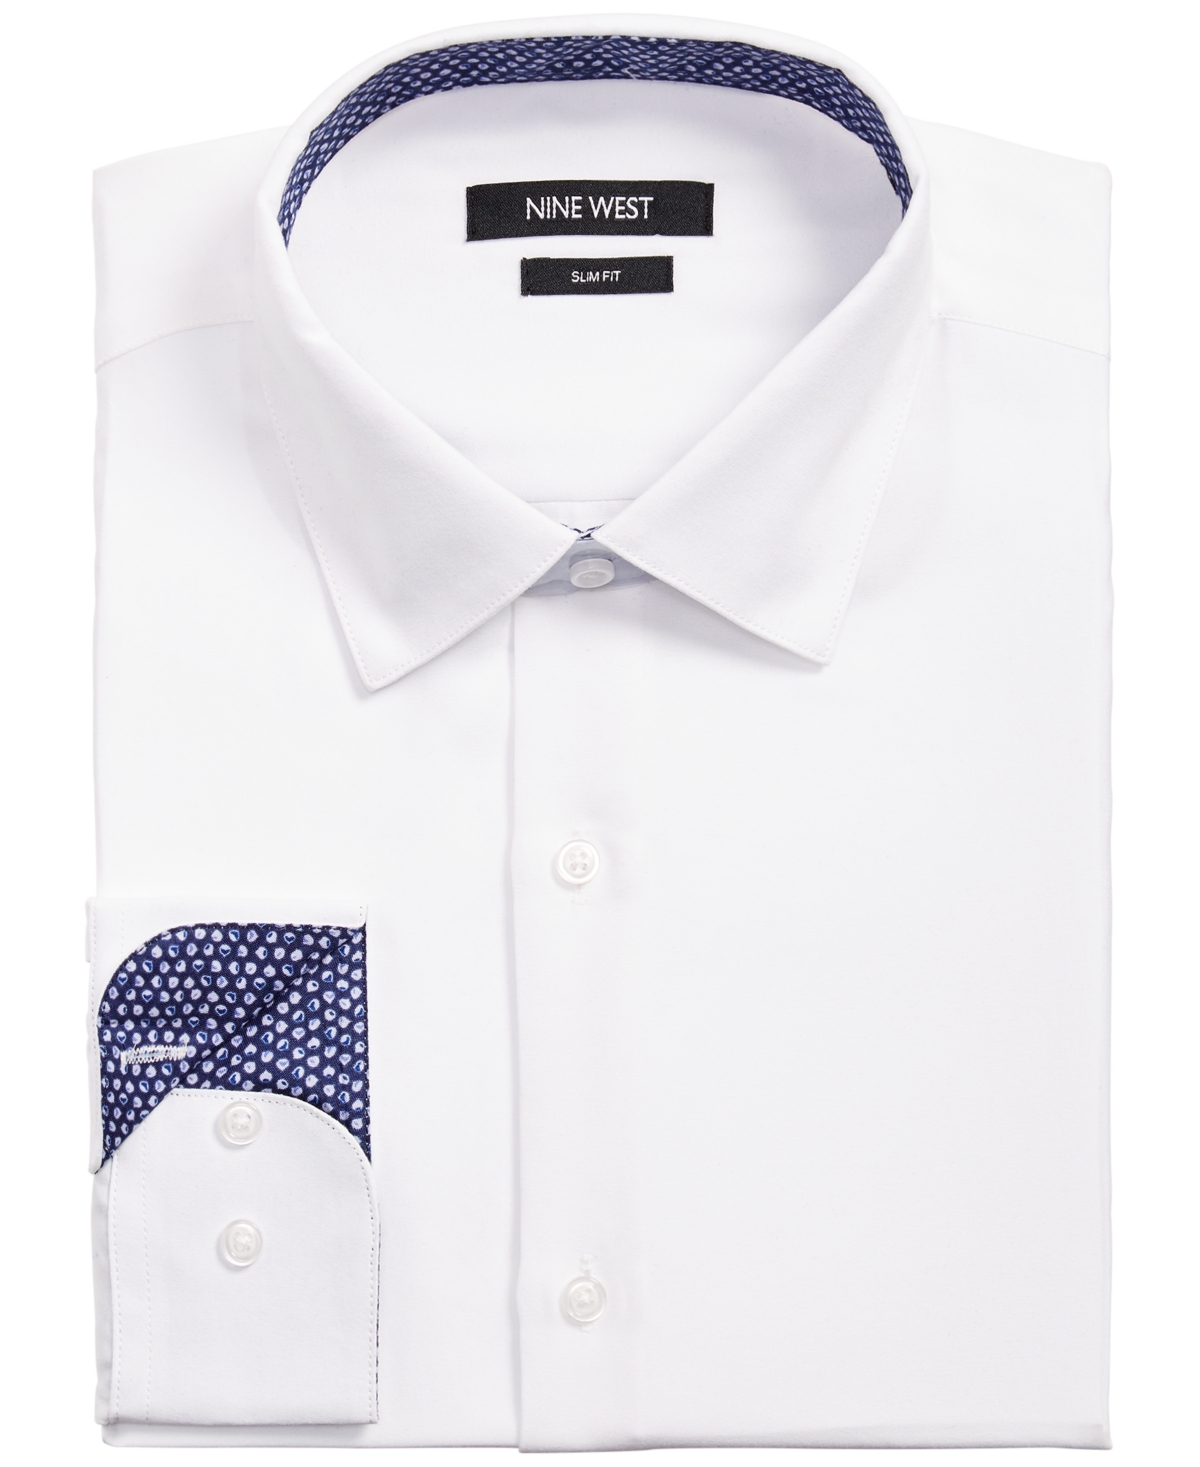 Men's Slim-Fit Performance Stretch Solid Dress Shirt - White/Navy